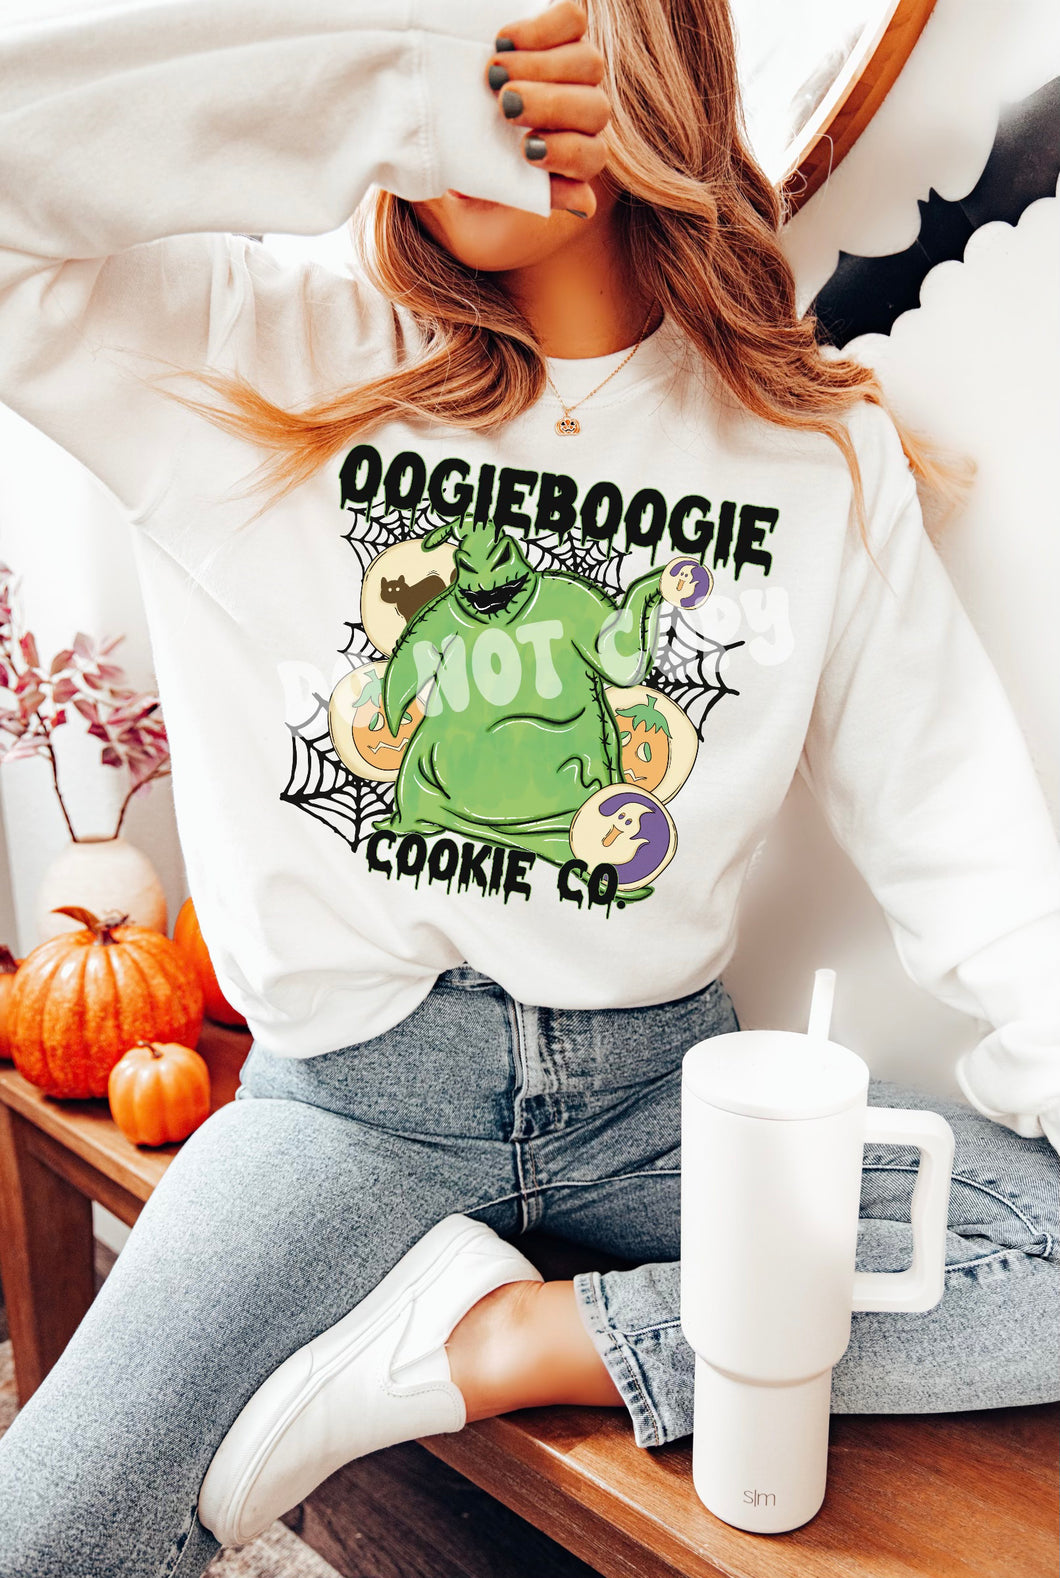 Oogie Boogie Cookie Co.